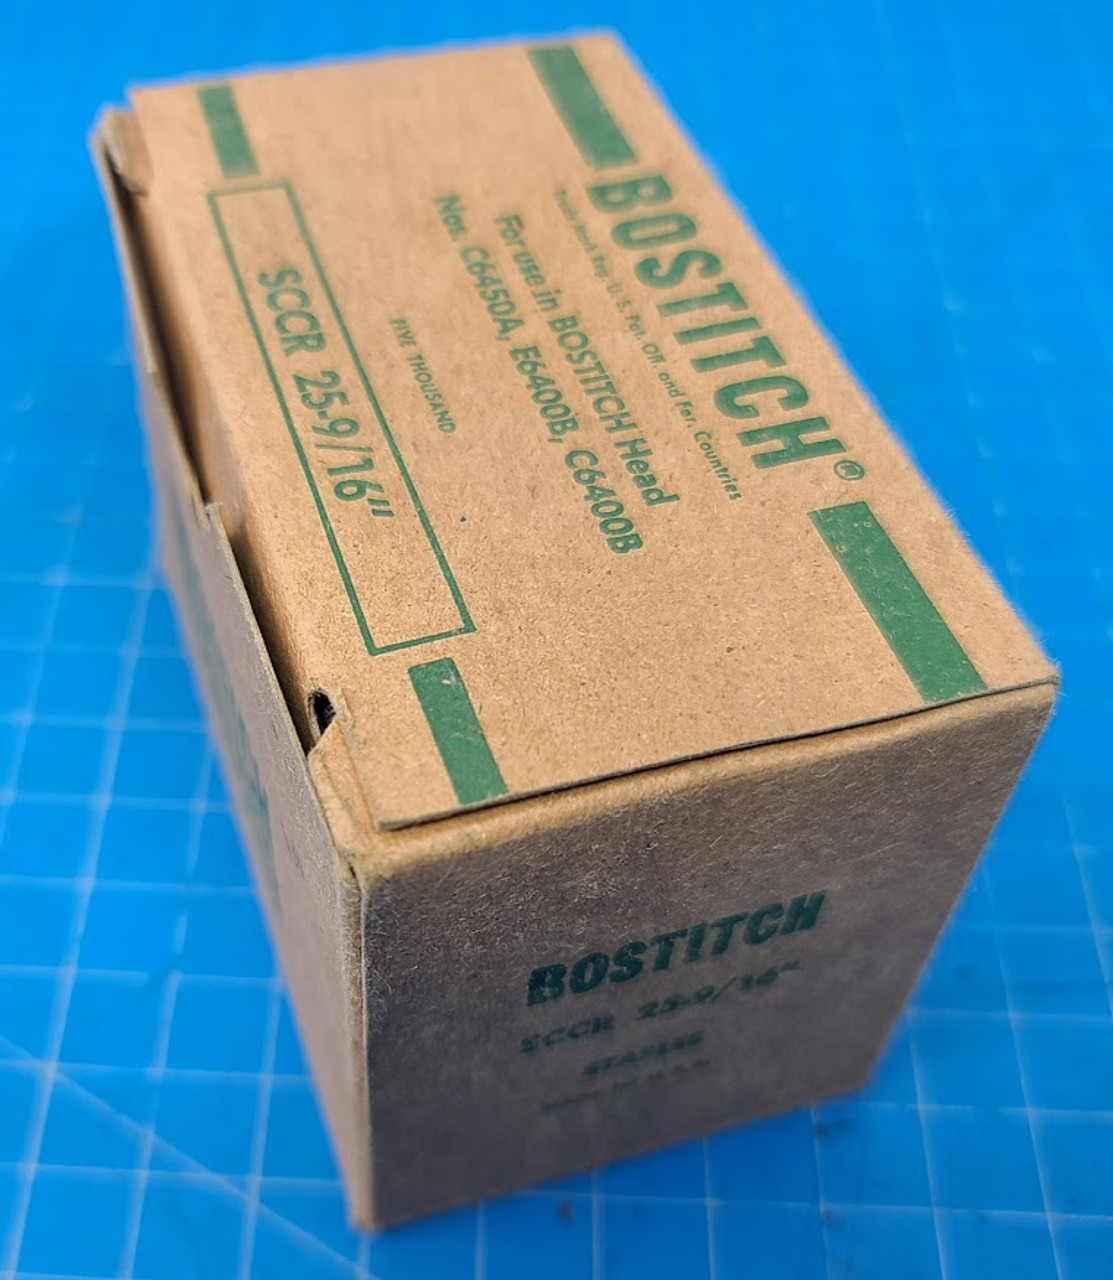 Bostitch SCCR 25-9/16" Staples Box of 5000